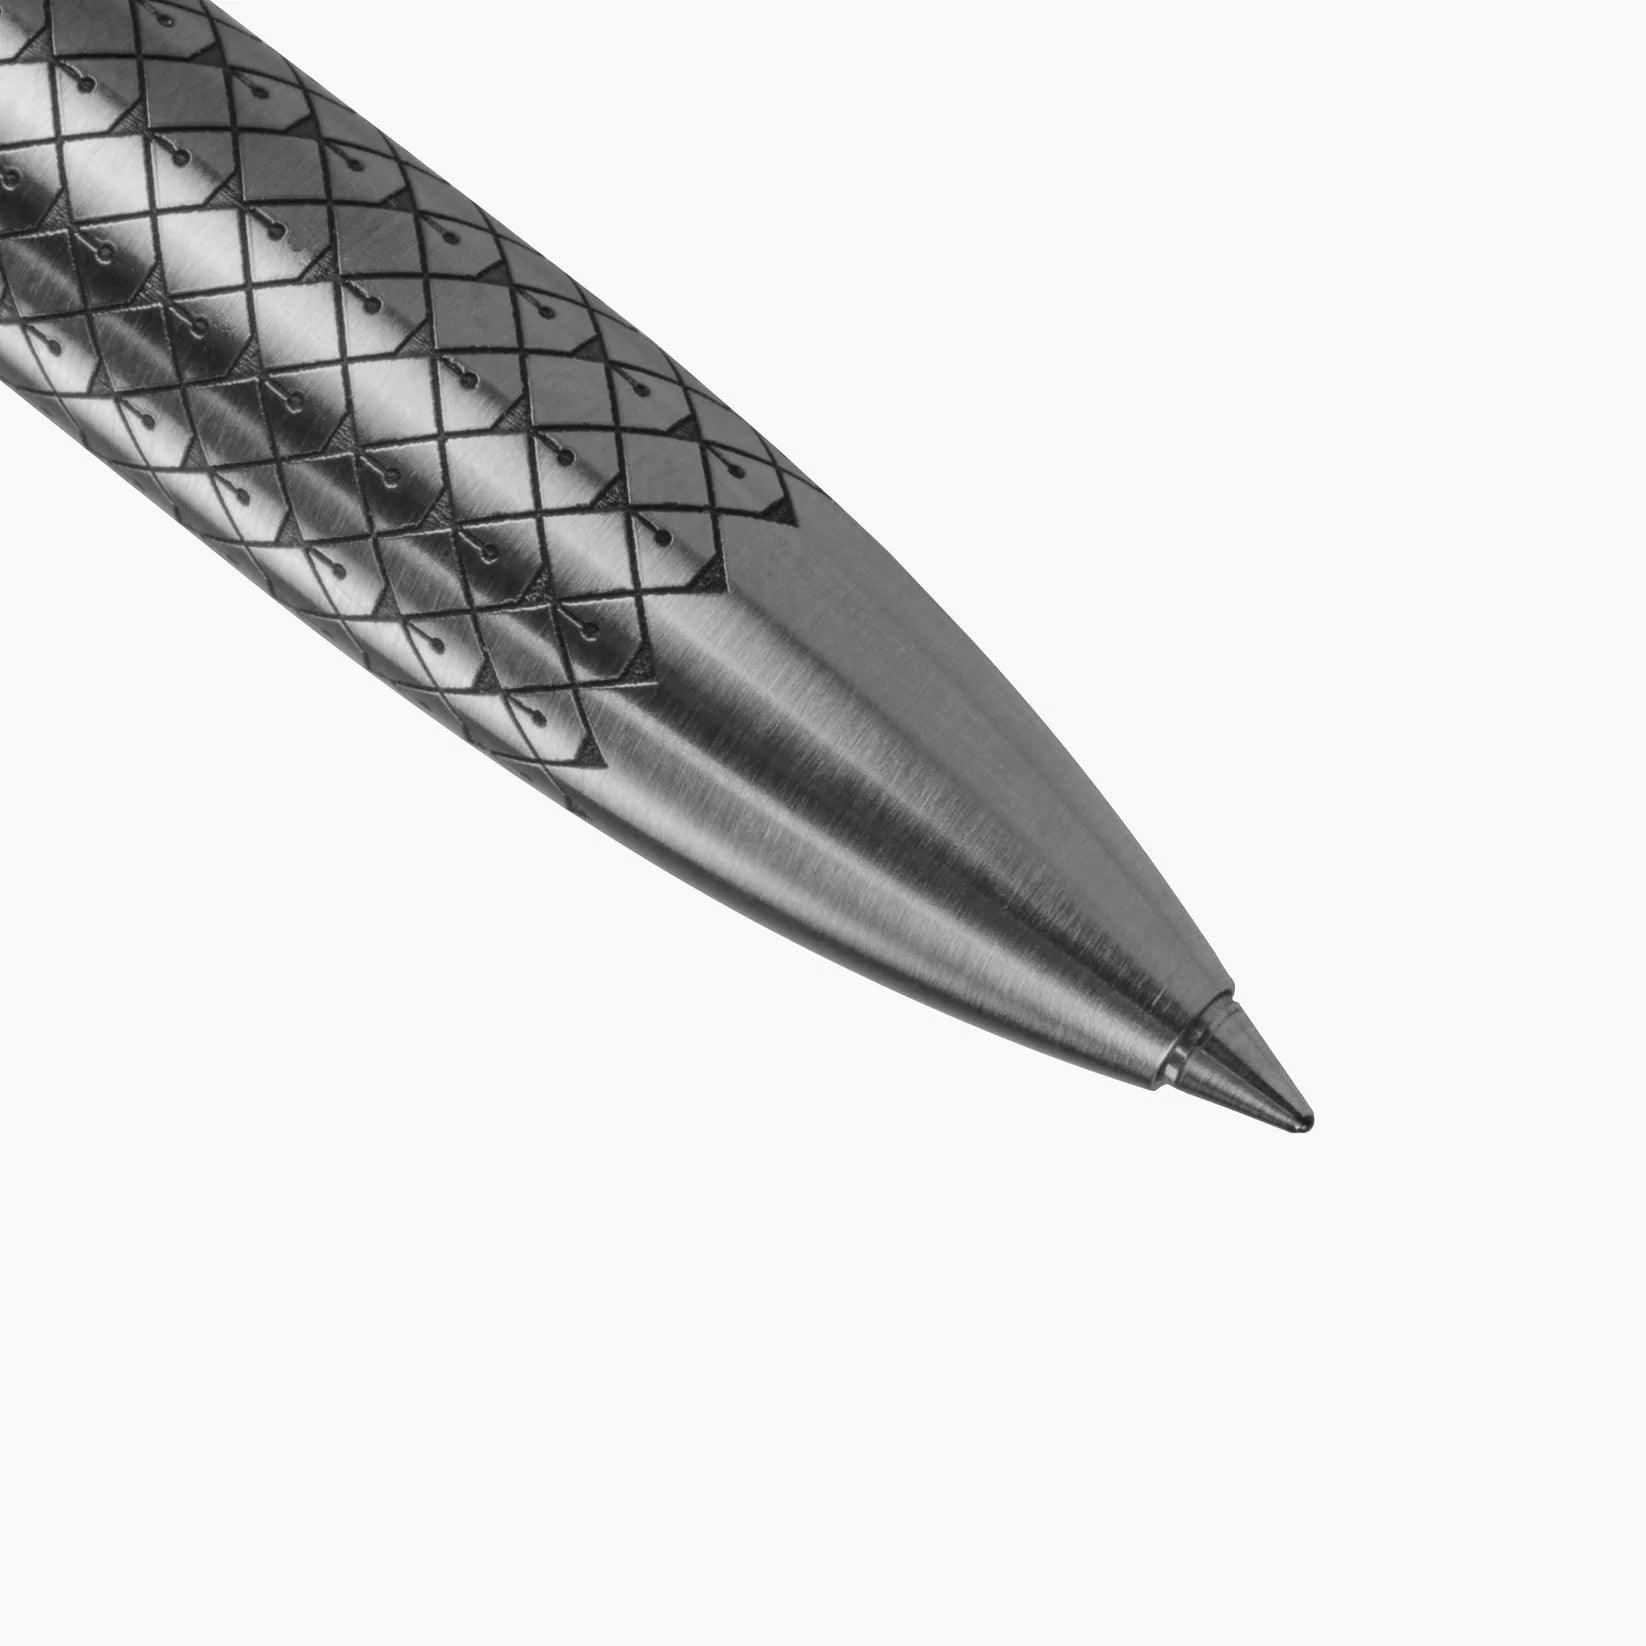 AJOTO for Laywine’s Signature Pattern Rollerball Pen Monochrome - Laywine's